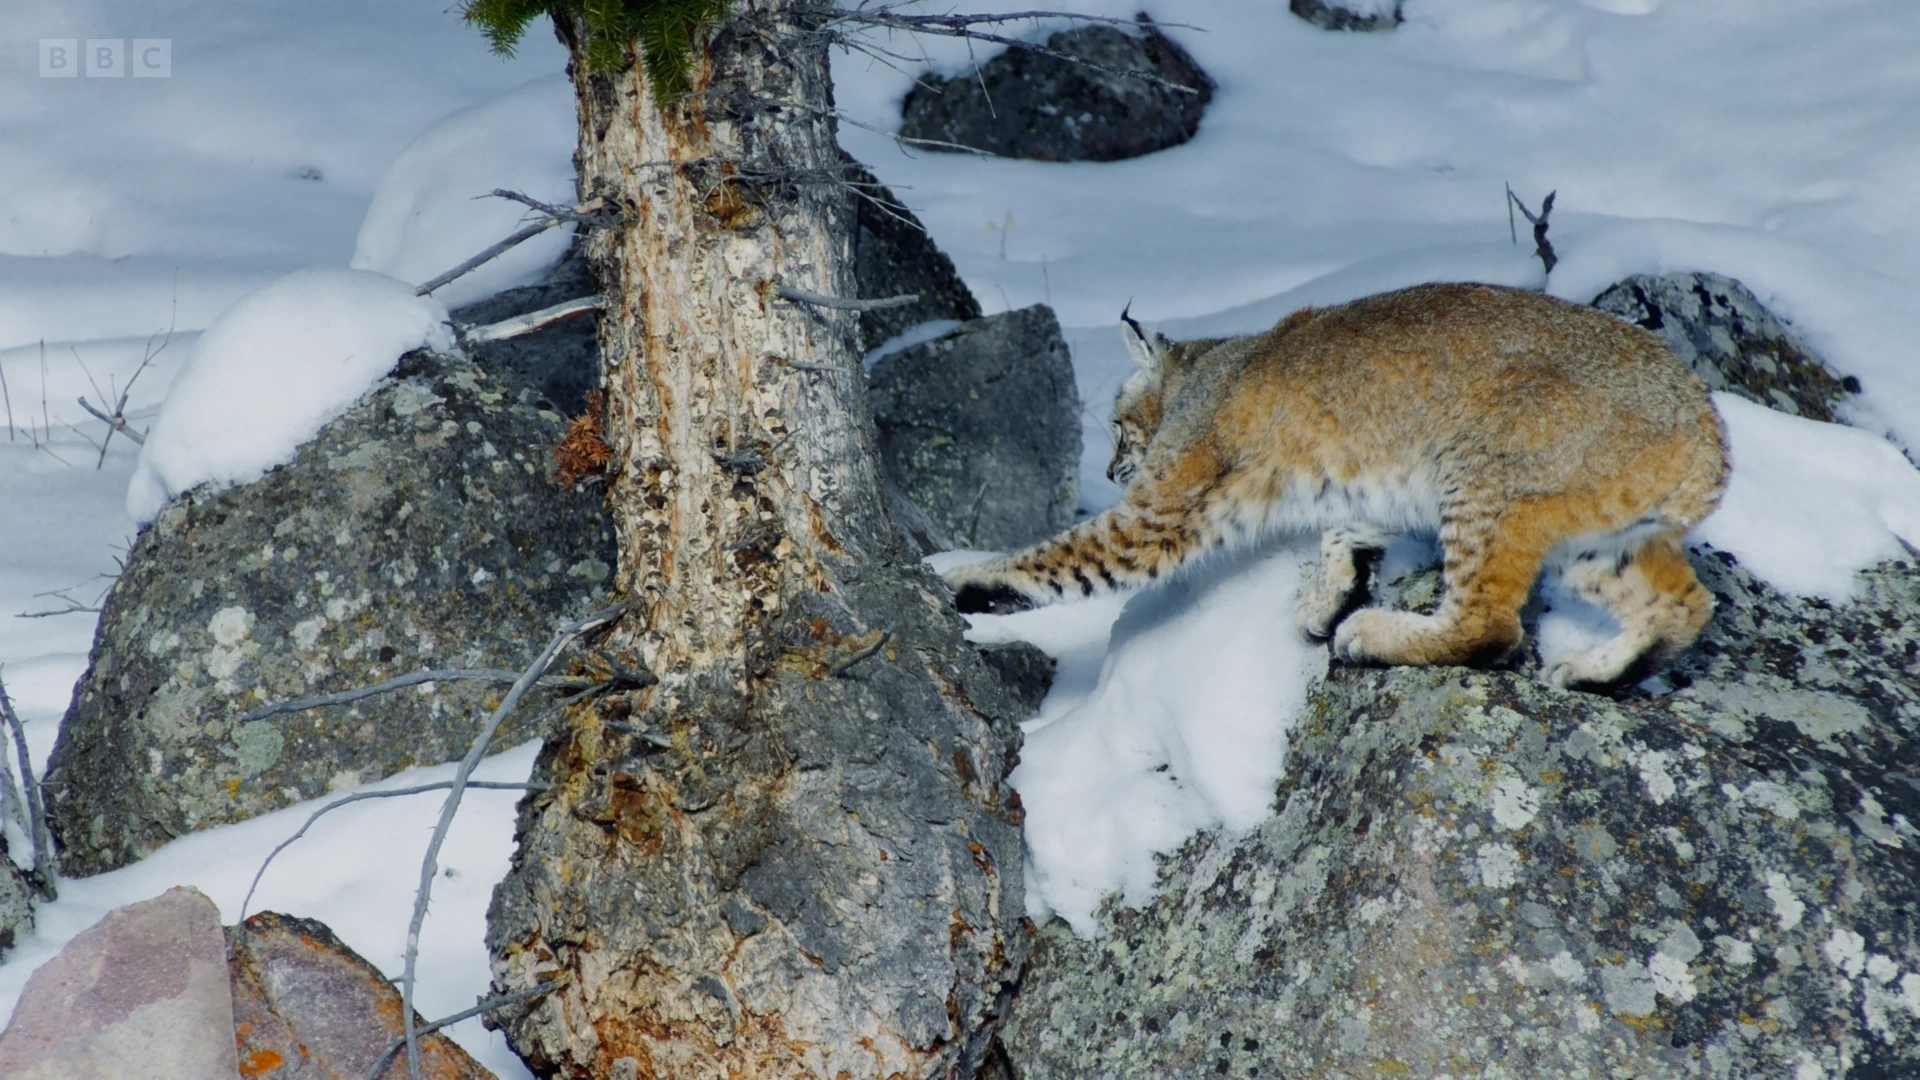 Bobcat (Lynx rufus fasciatus) as shown in Planet Earth II - Mountains